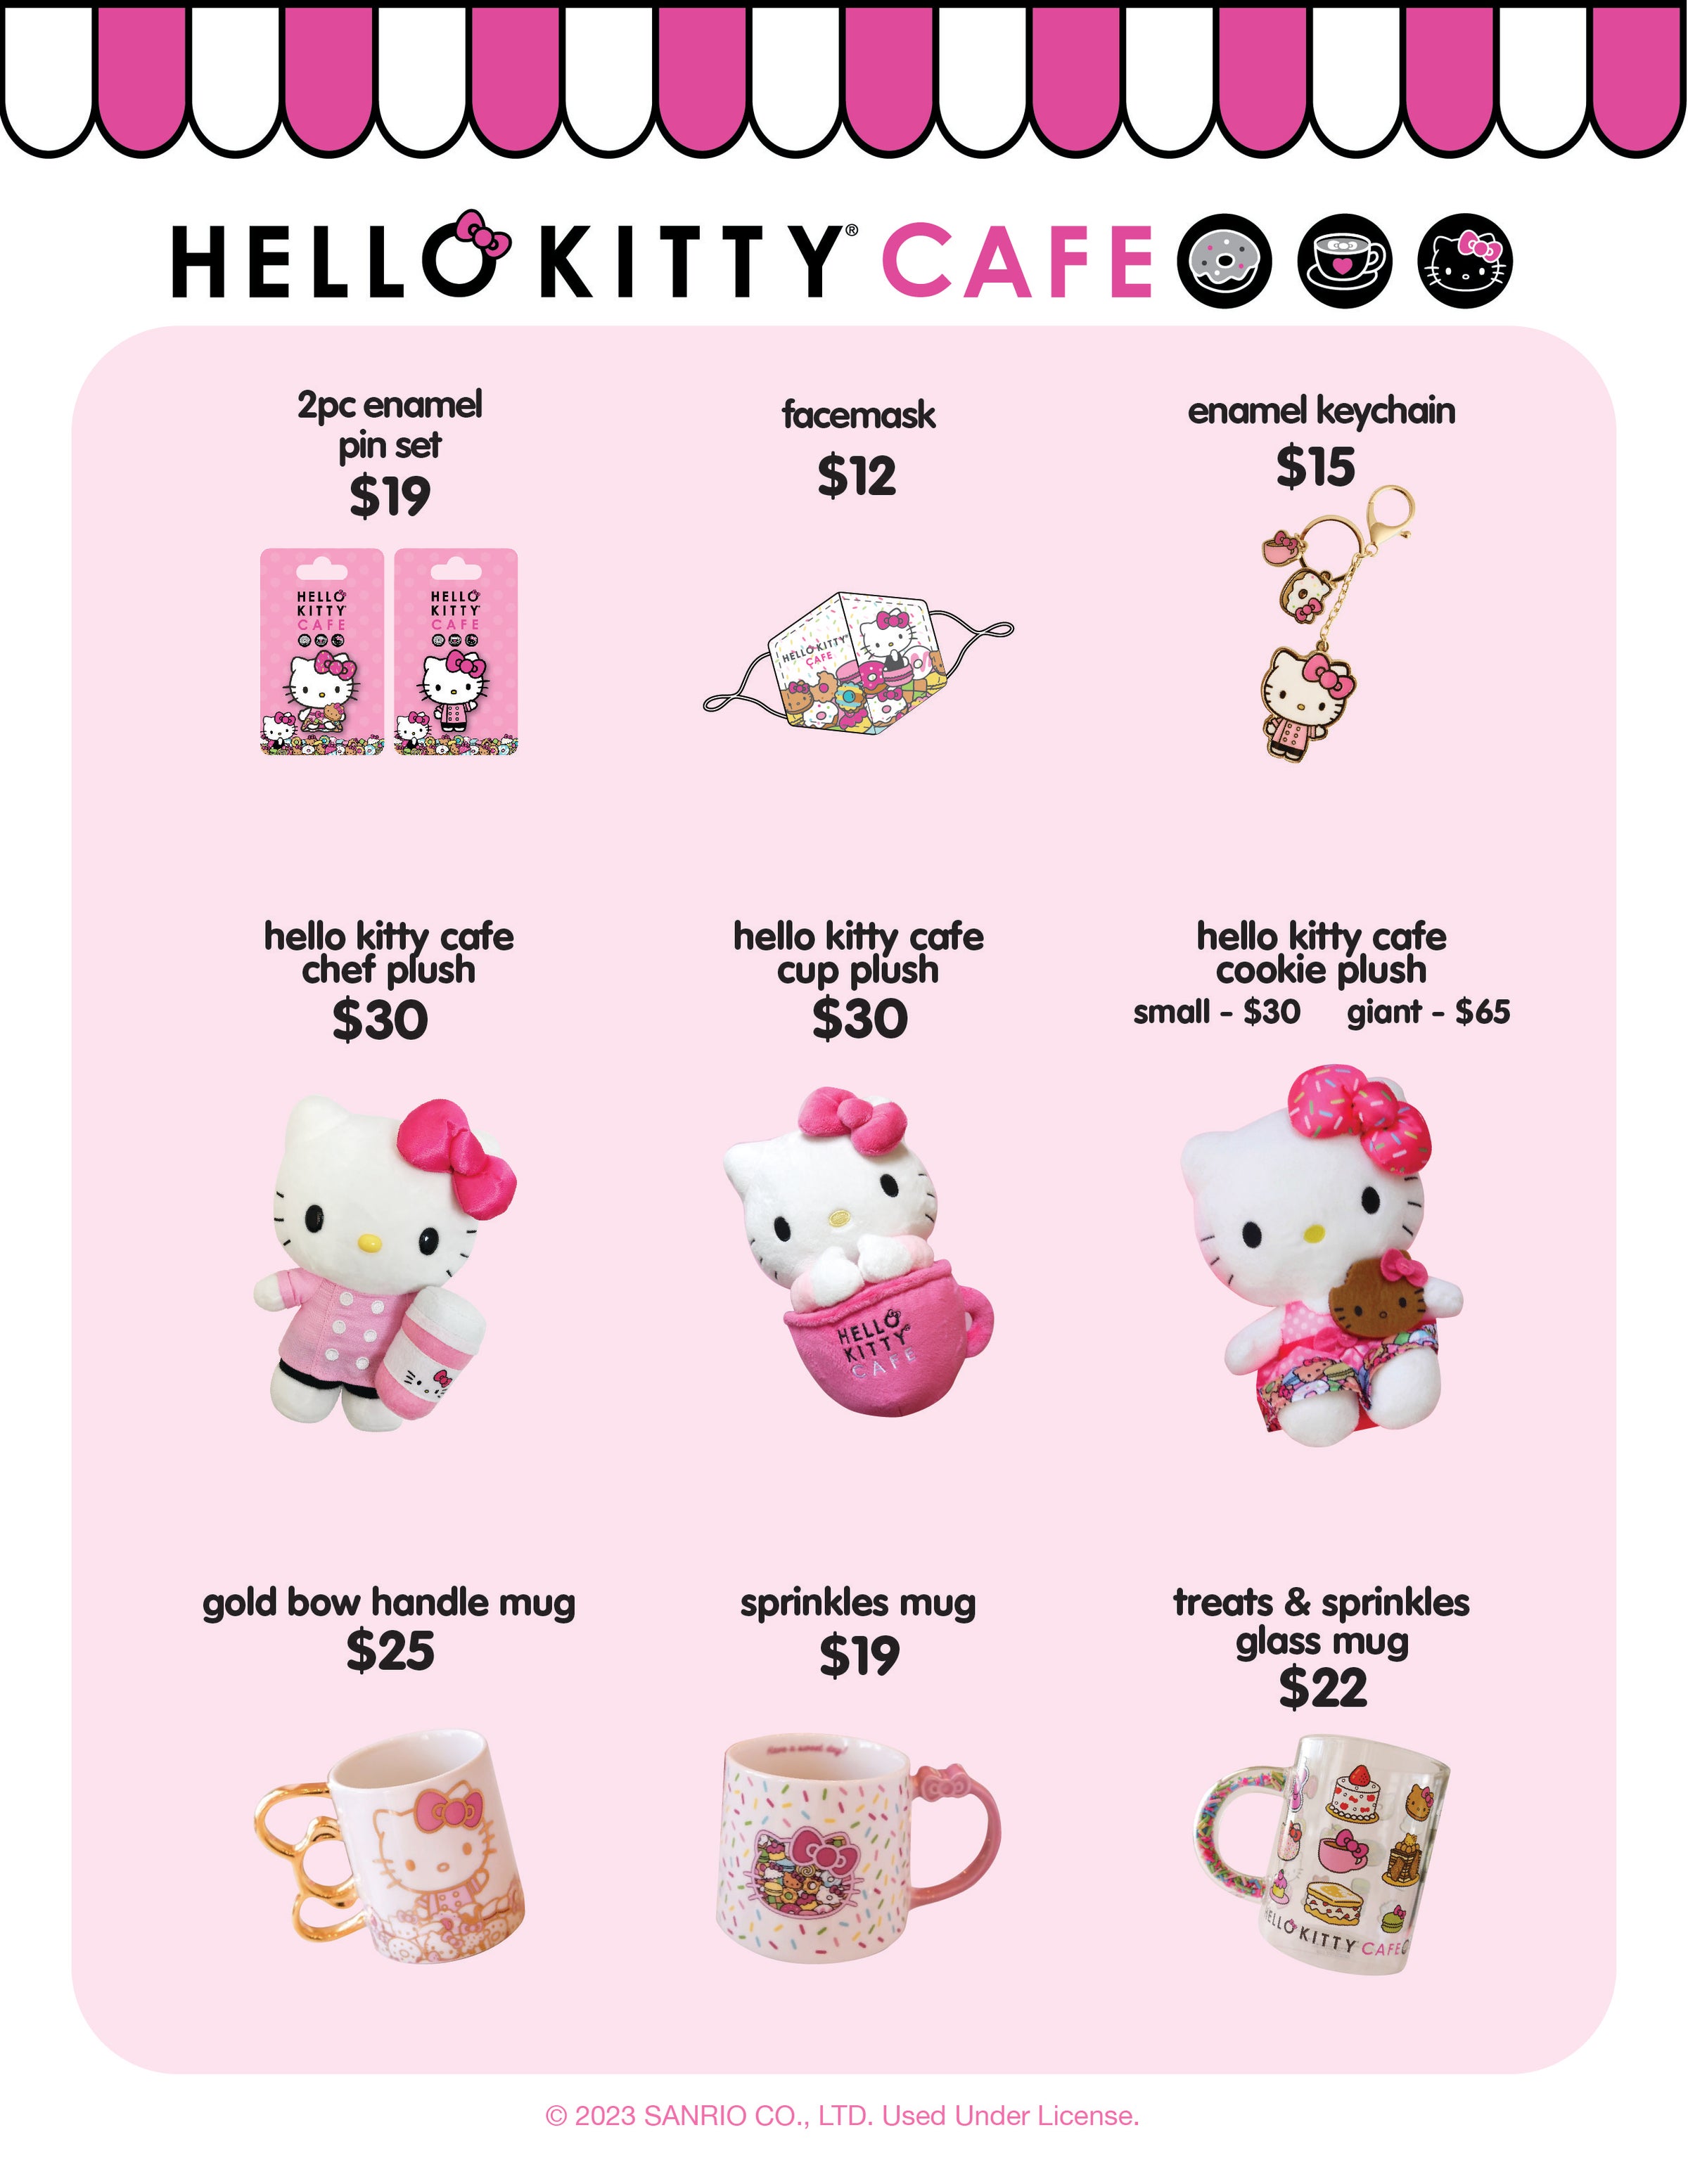 Hello Kitty Cafe Irvine, Cafe in Irvine California